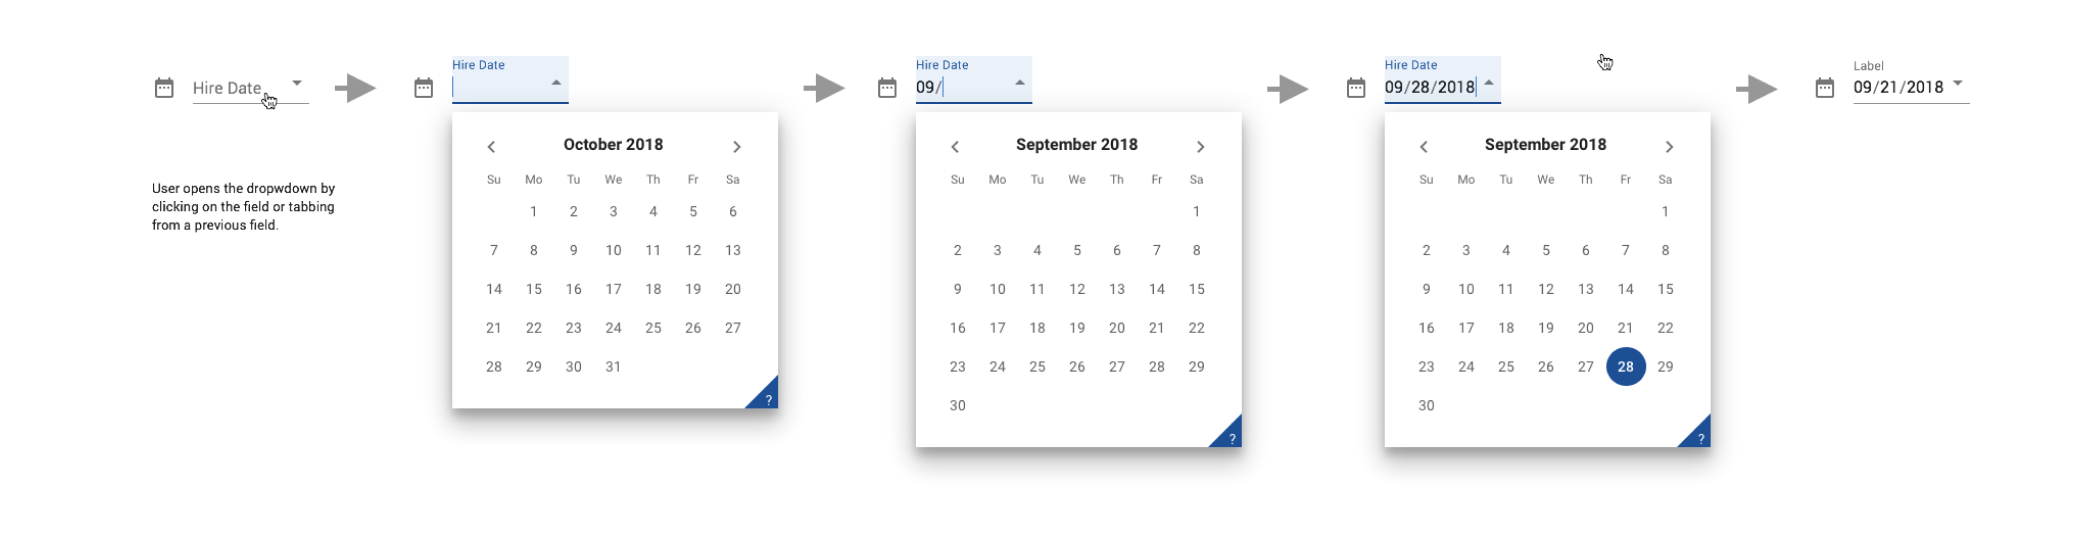 Design system calendar date picker